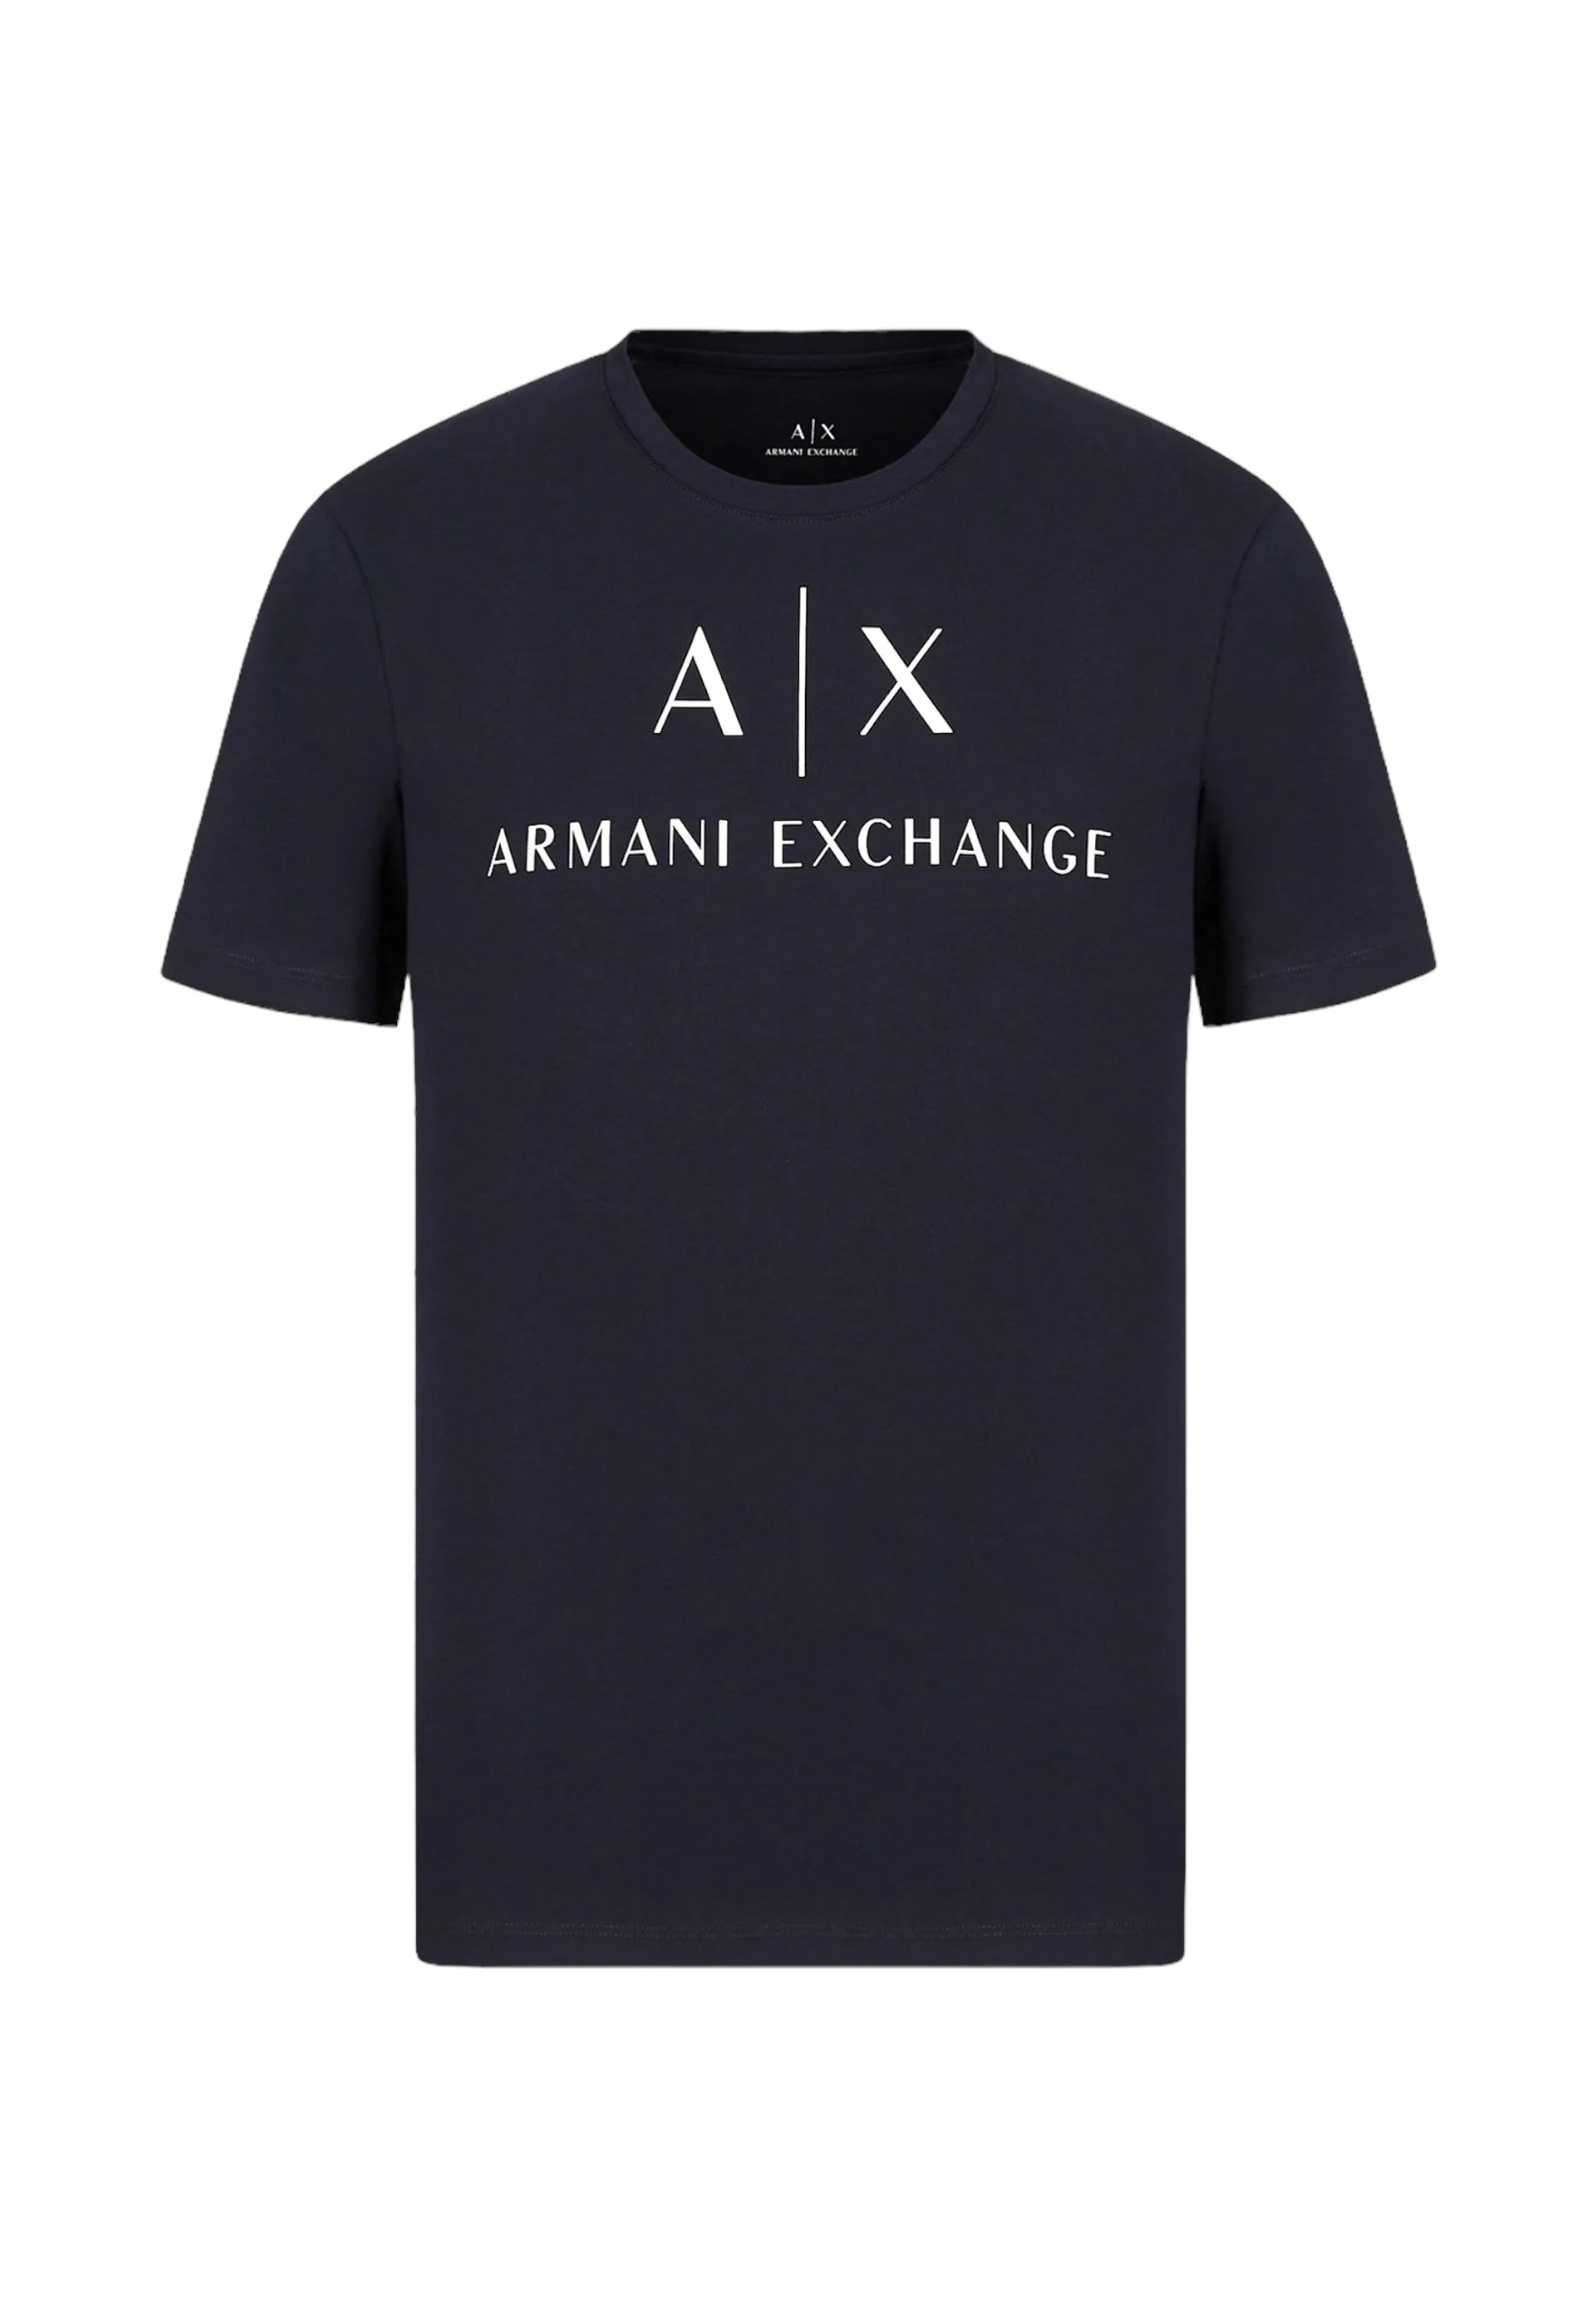 Armani Exchange T-Shirt* 8nztcj Navy